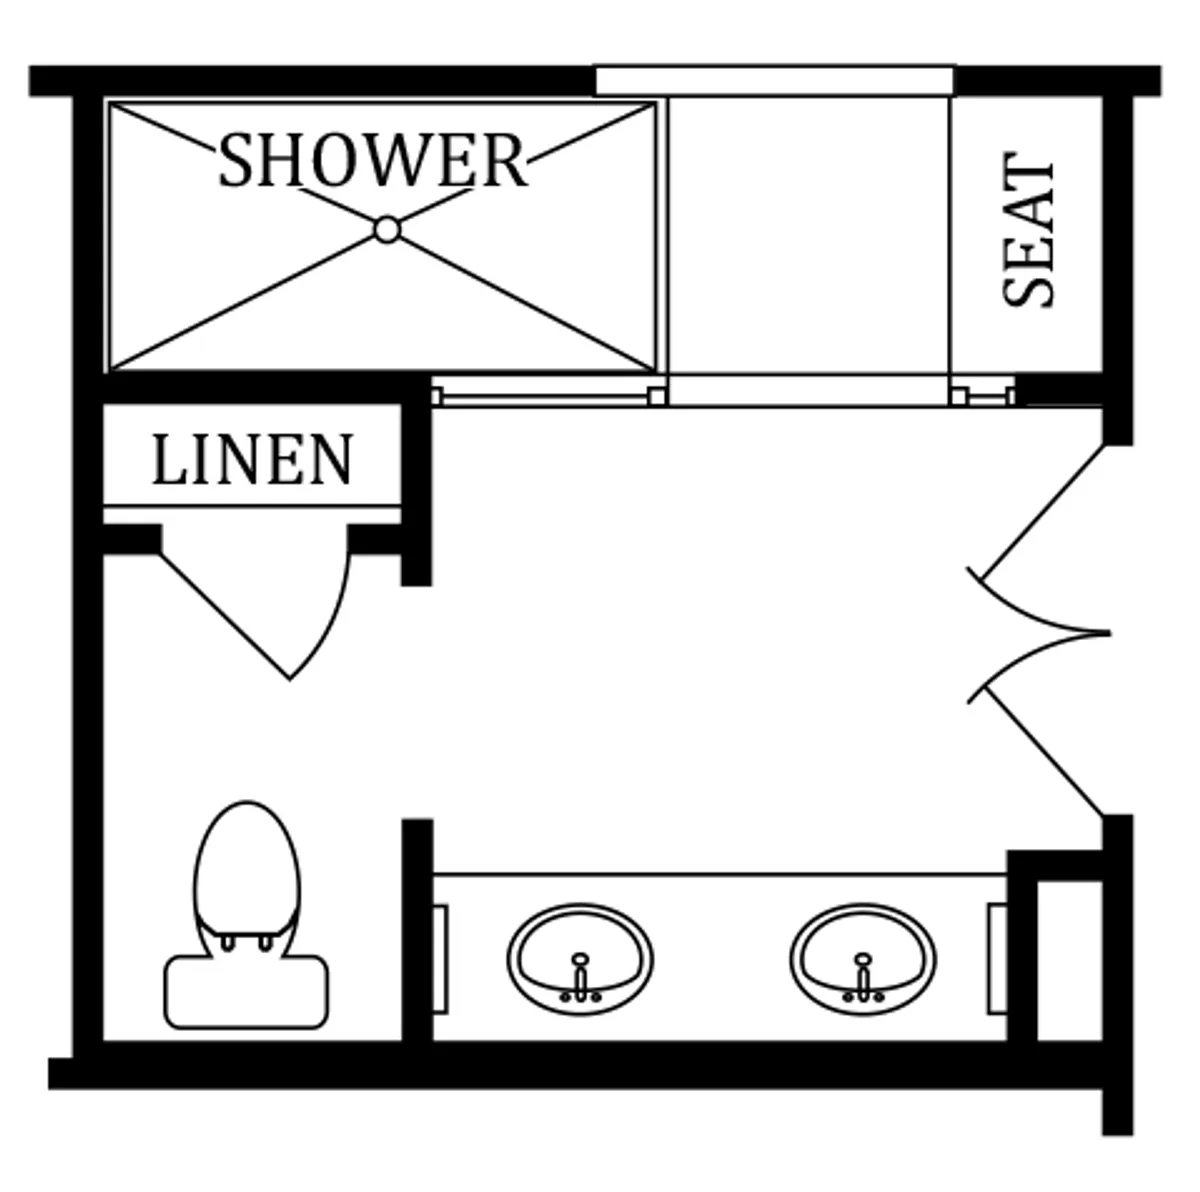 Alternate Second Floor Plan | Optional Roman Bath